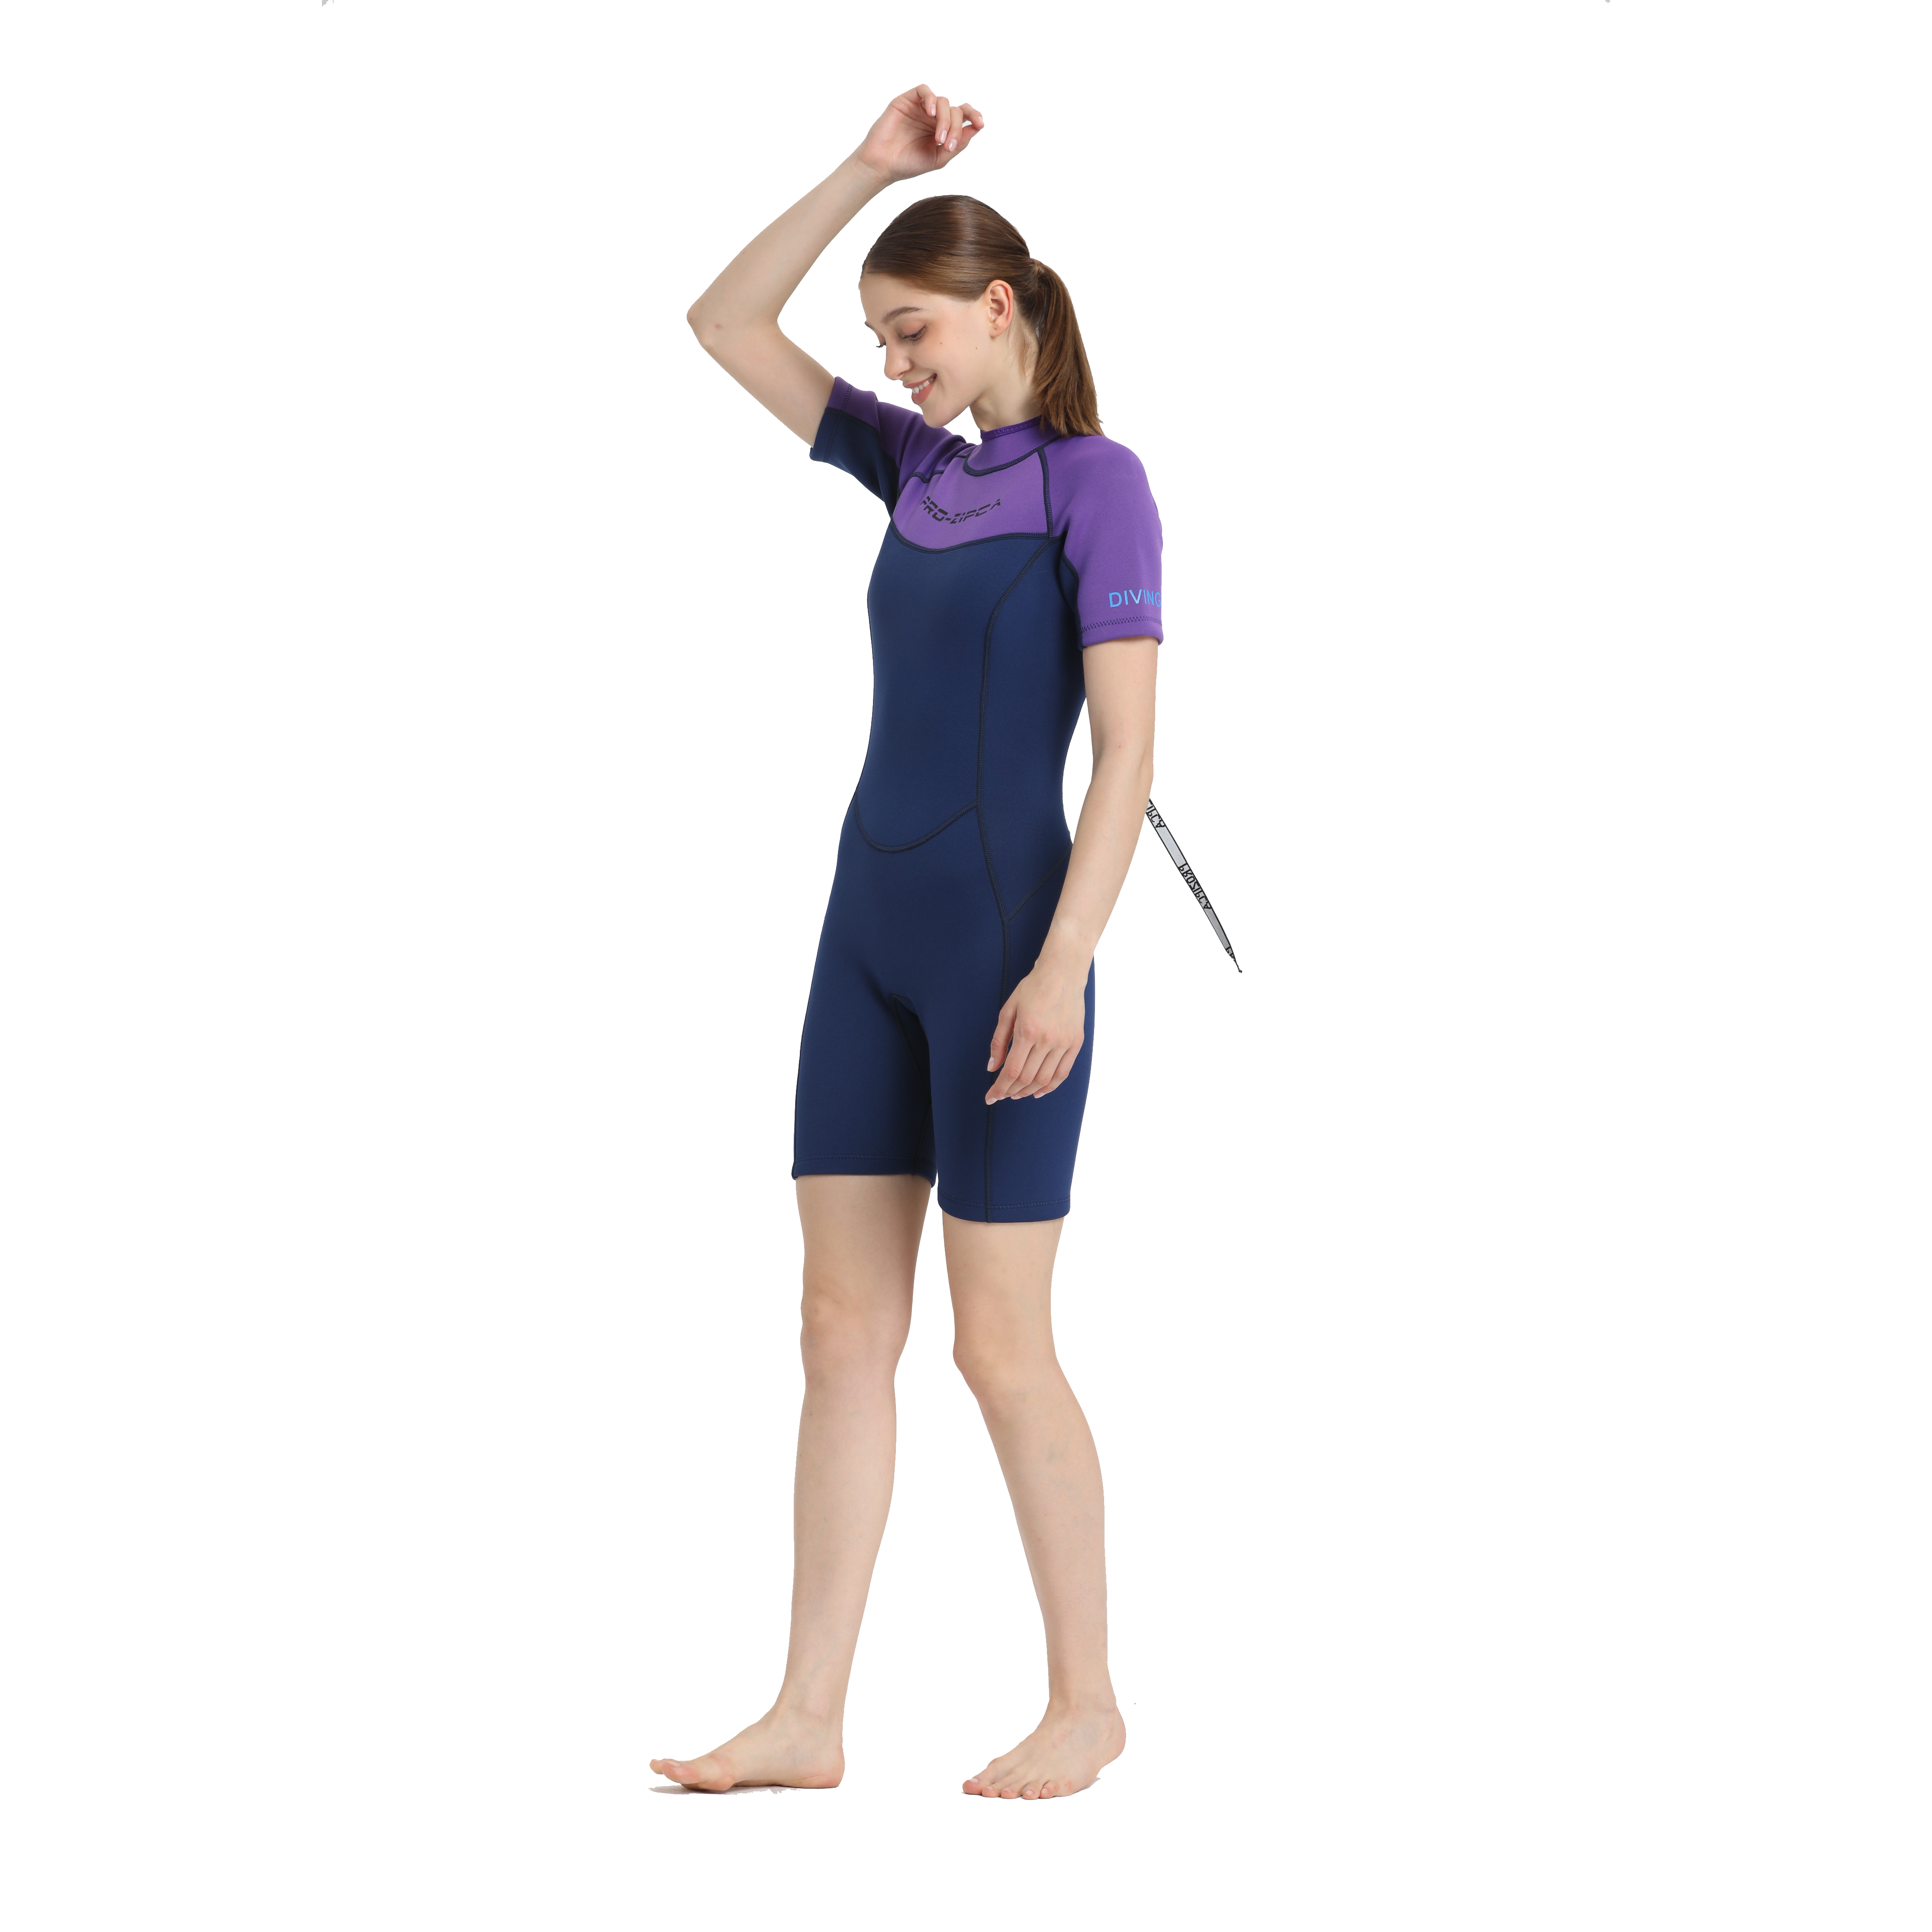 Customized New Design High Elasticity One Piece Tight Shorts Breathable Yamamoto Neoprene 3Mm Women Wetsuit